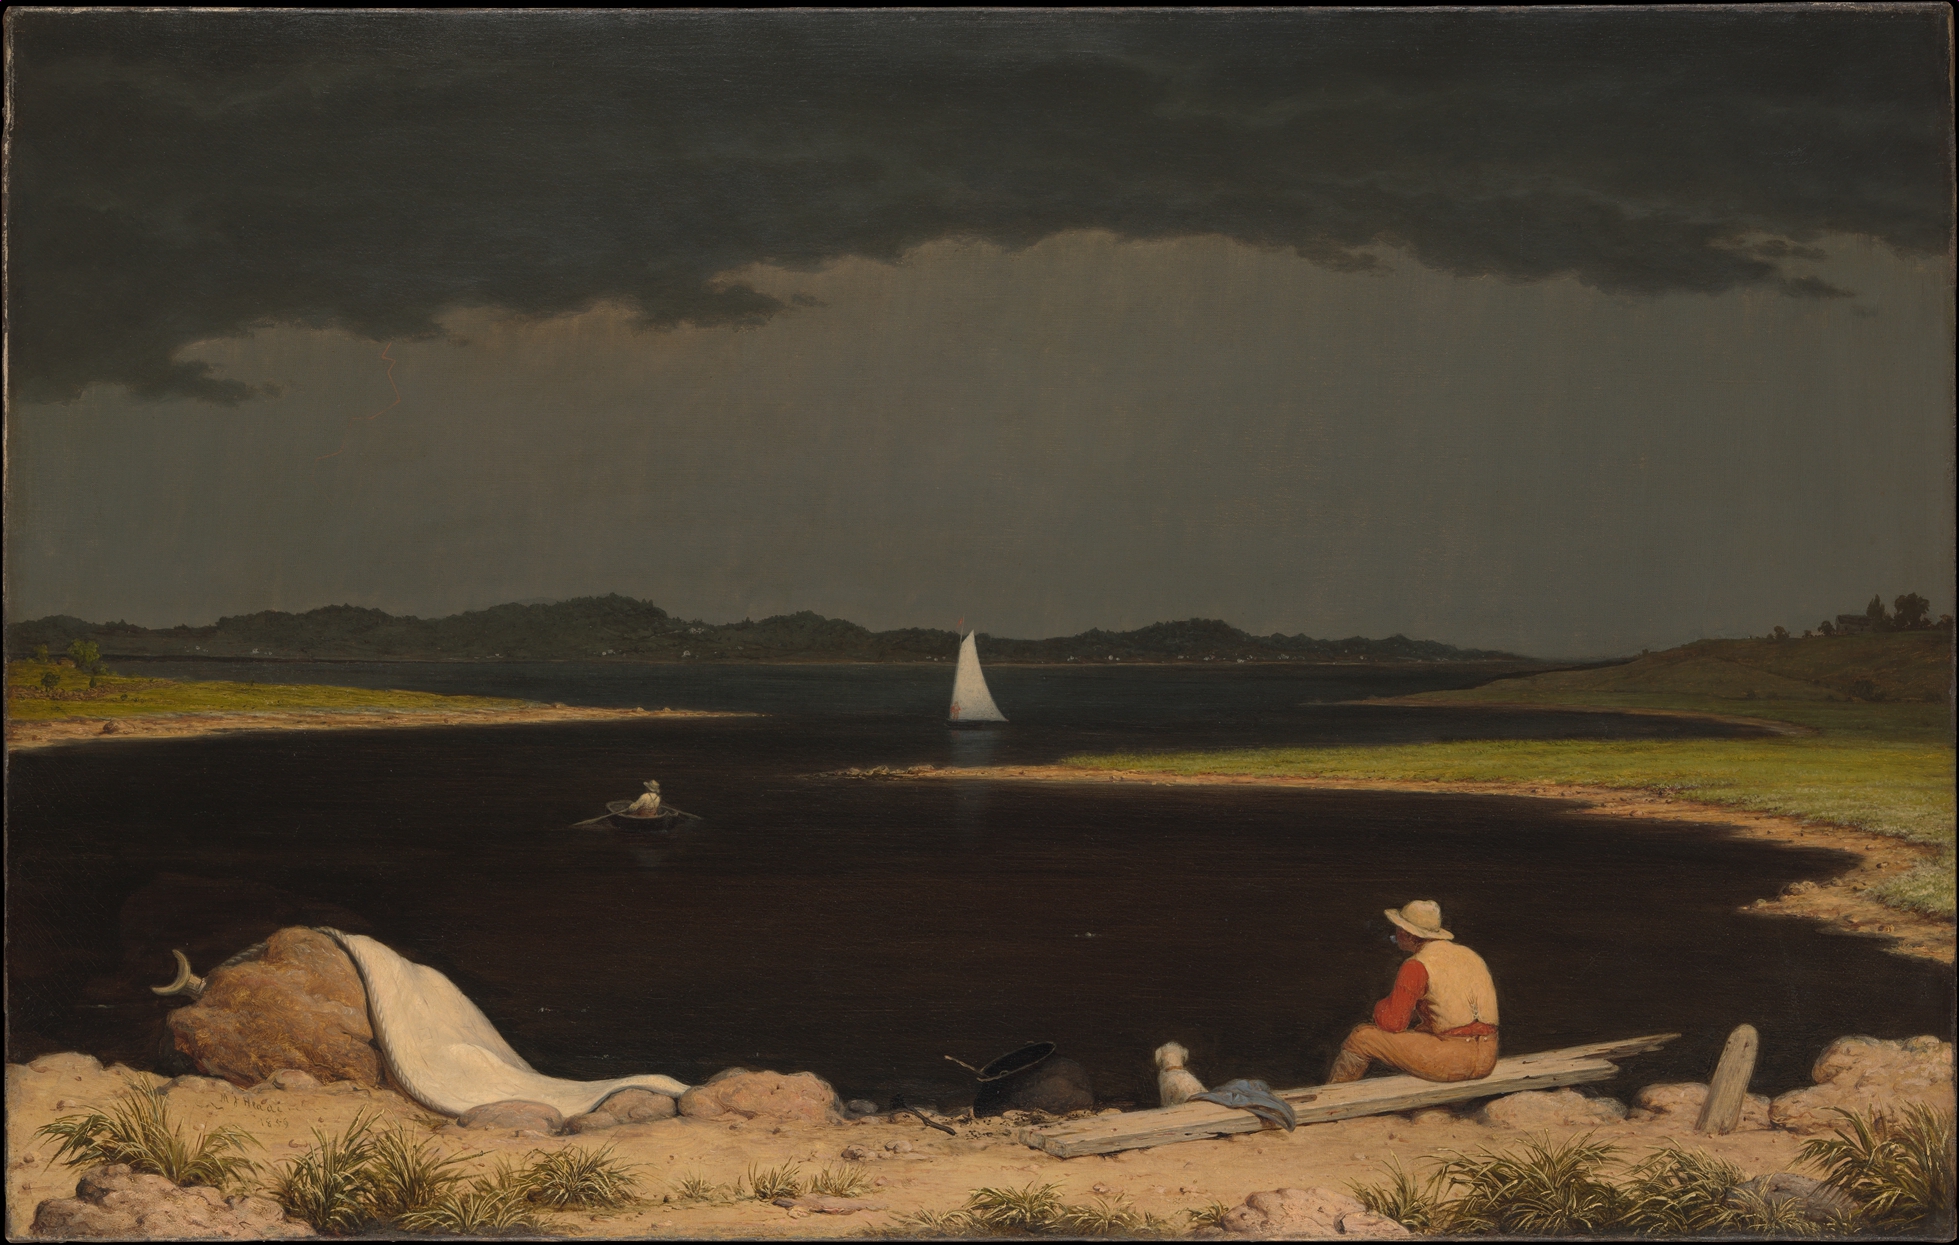 Naderend onweer by Martin Johnson Heade - 1859 - 71,1 x 111,8 cm 